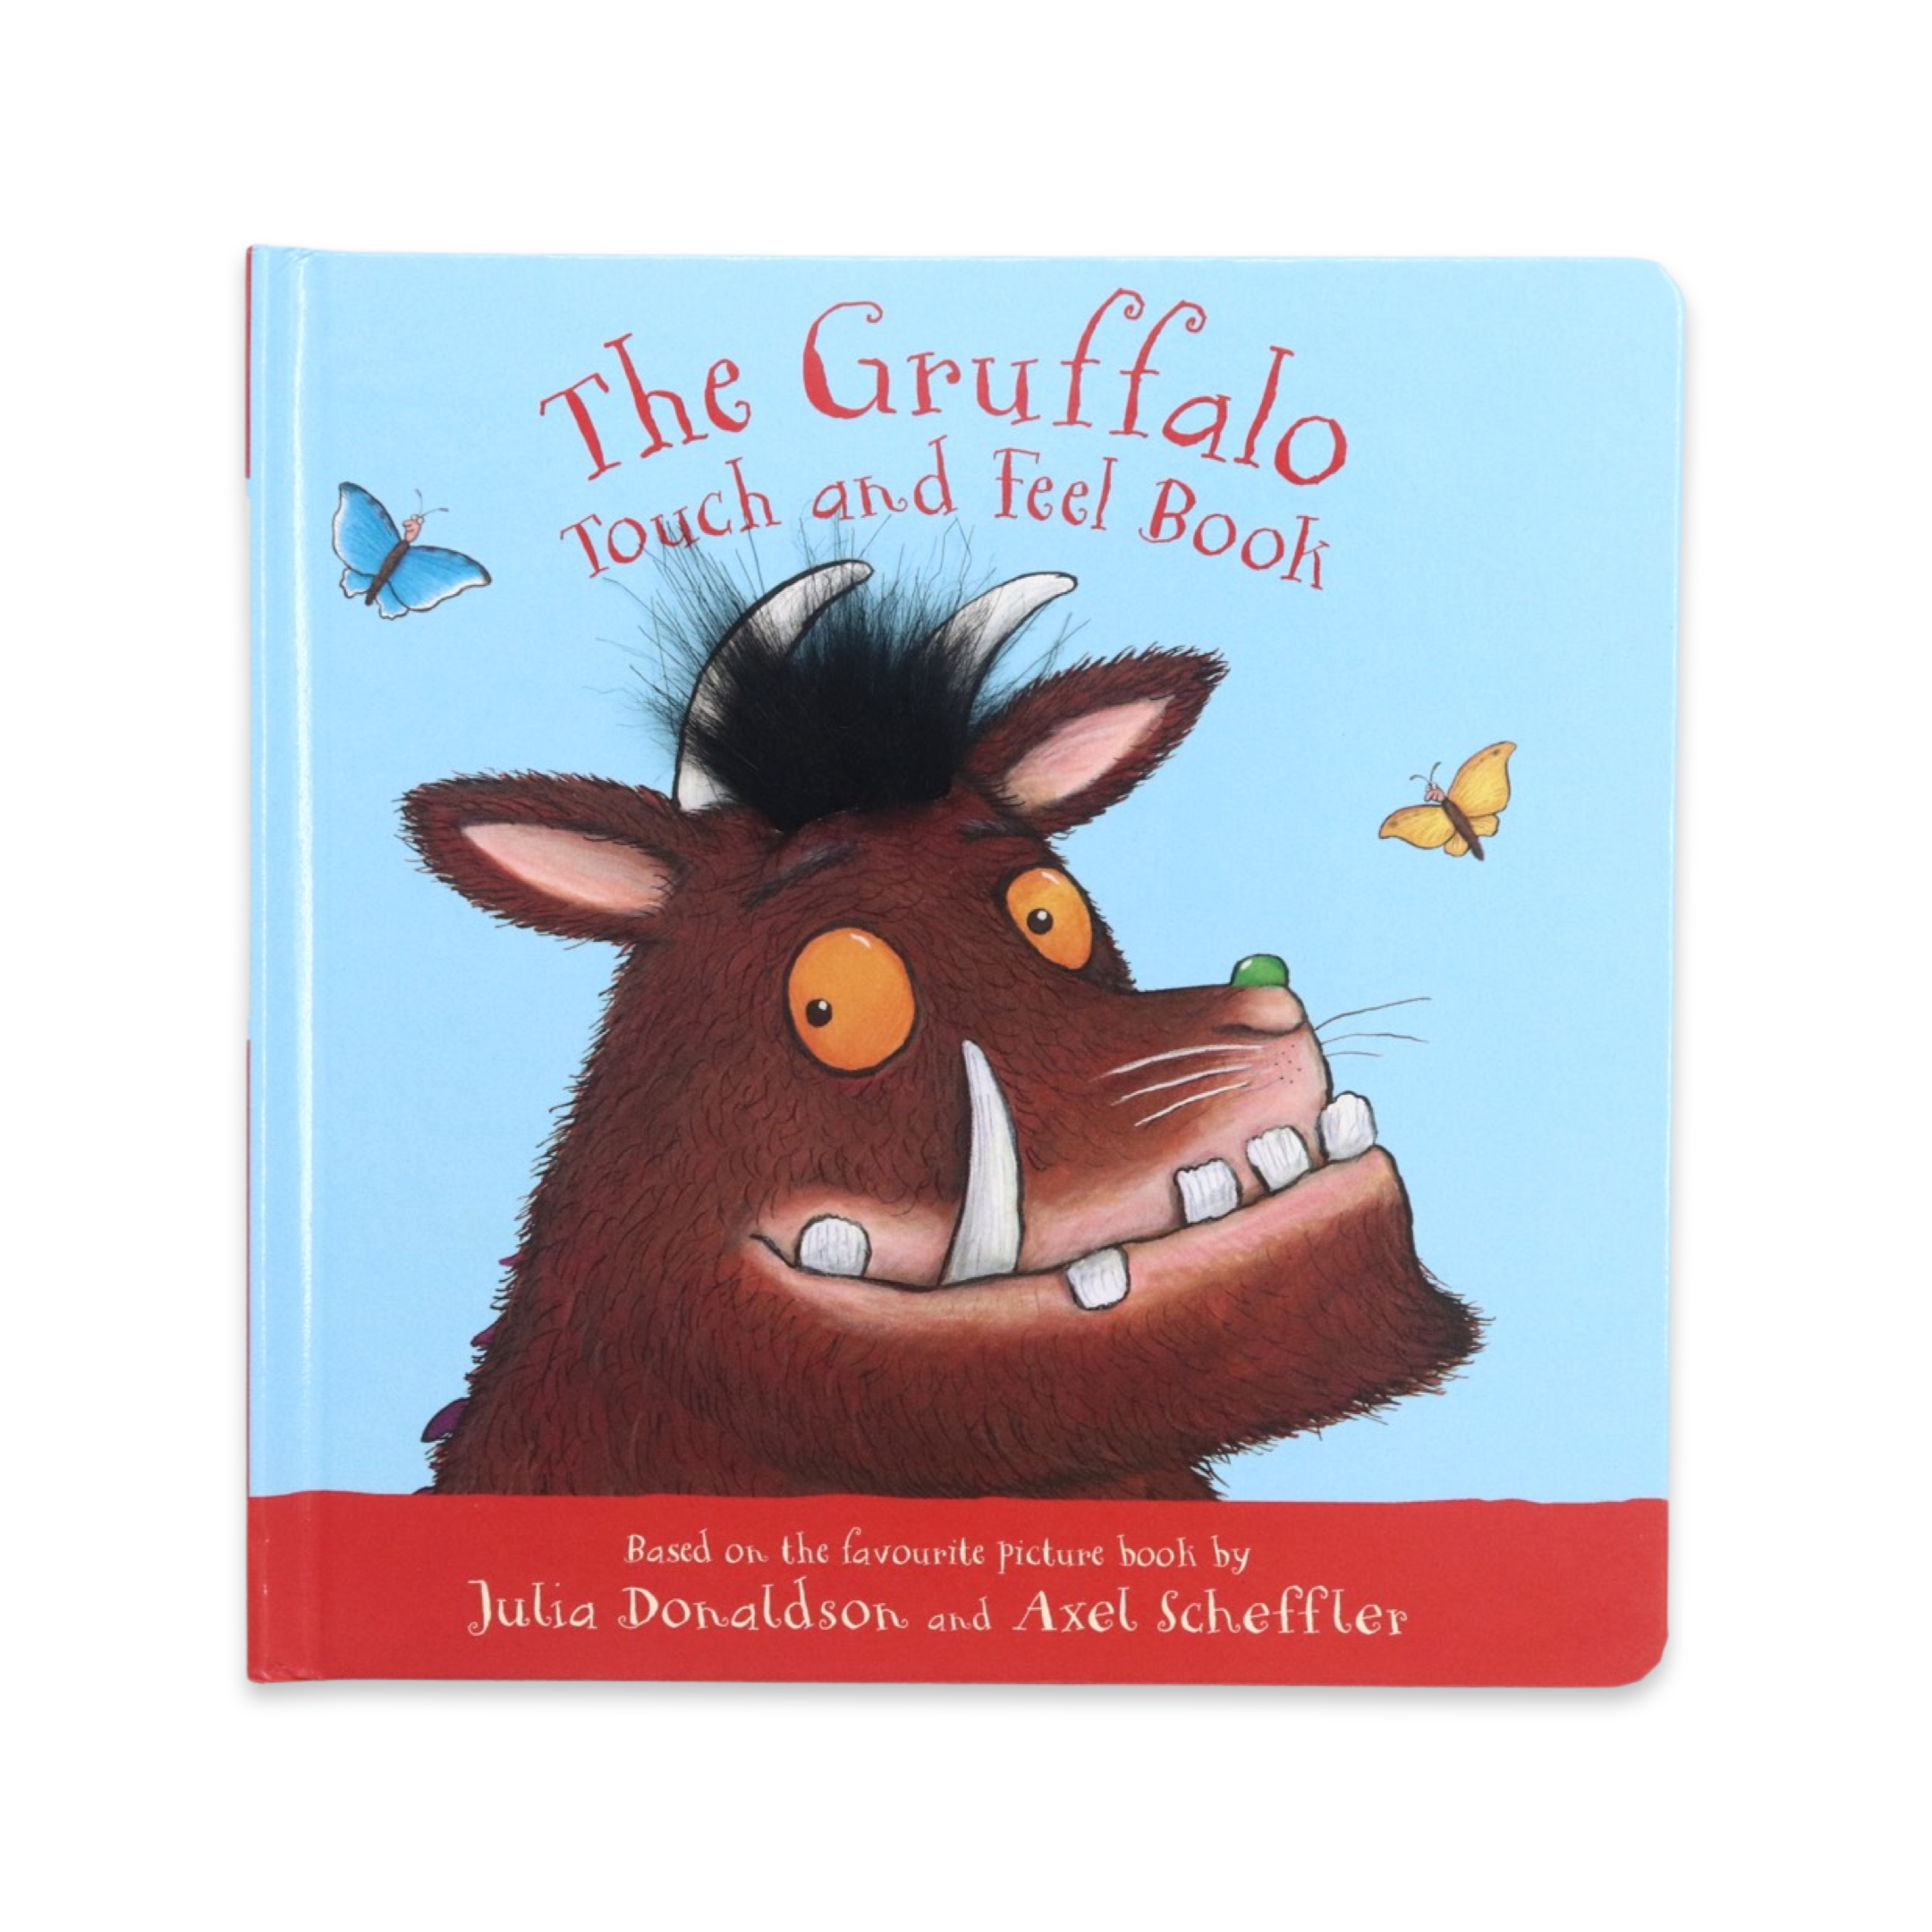 Say Hello to the Gruffalo book by Julia Donaldson